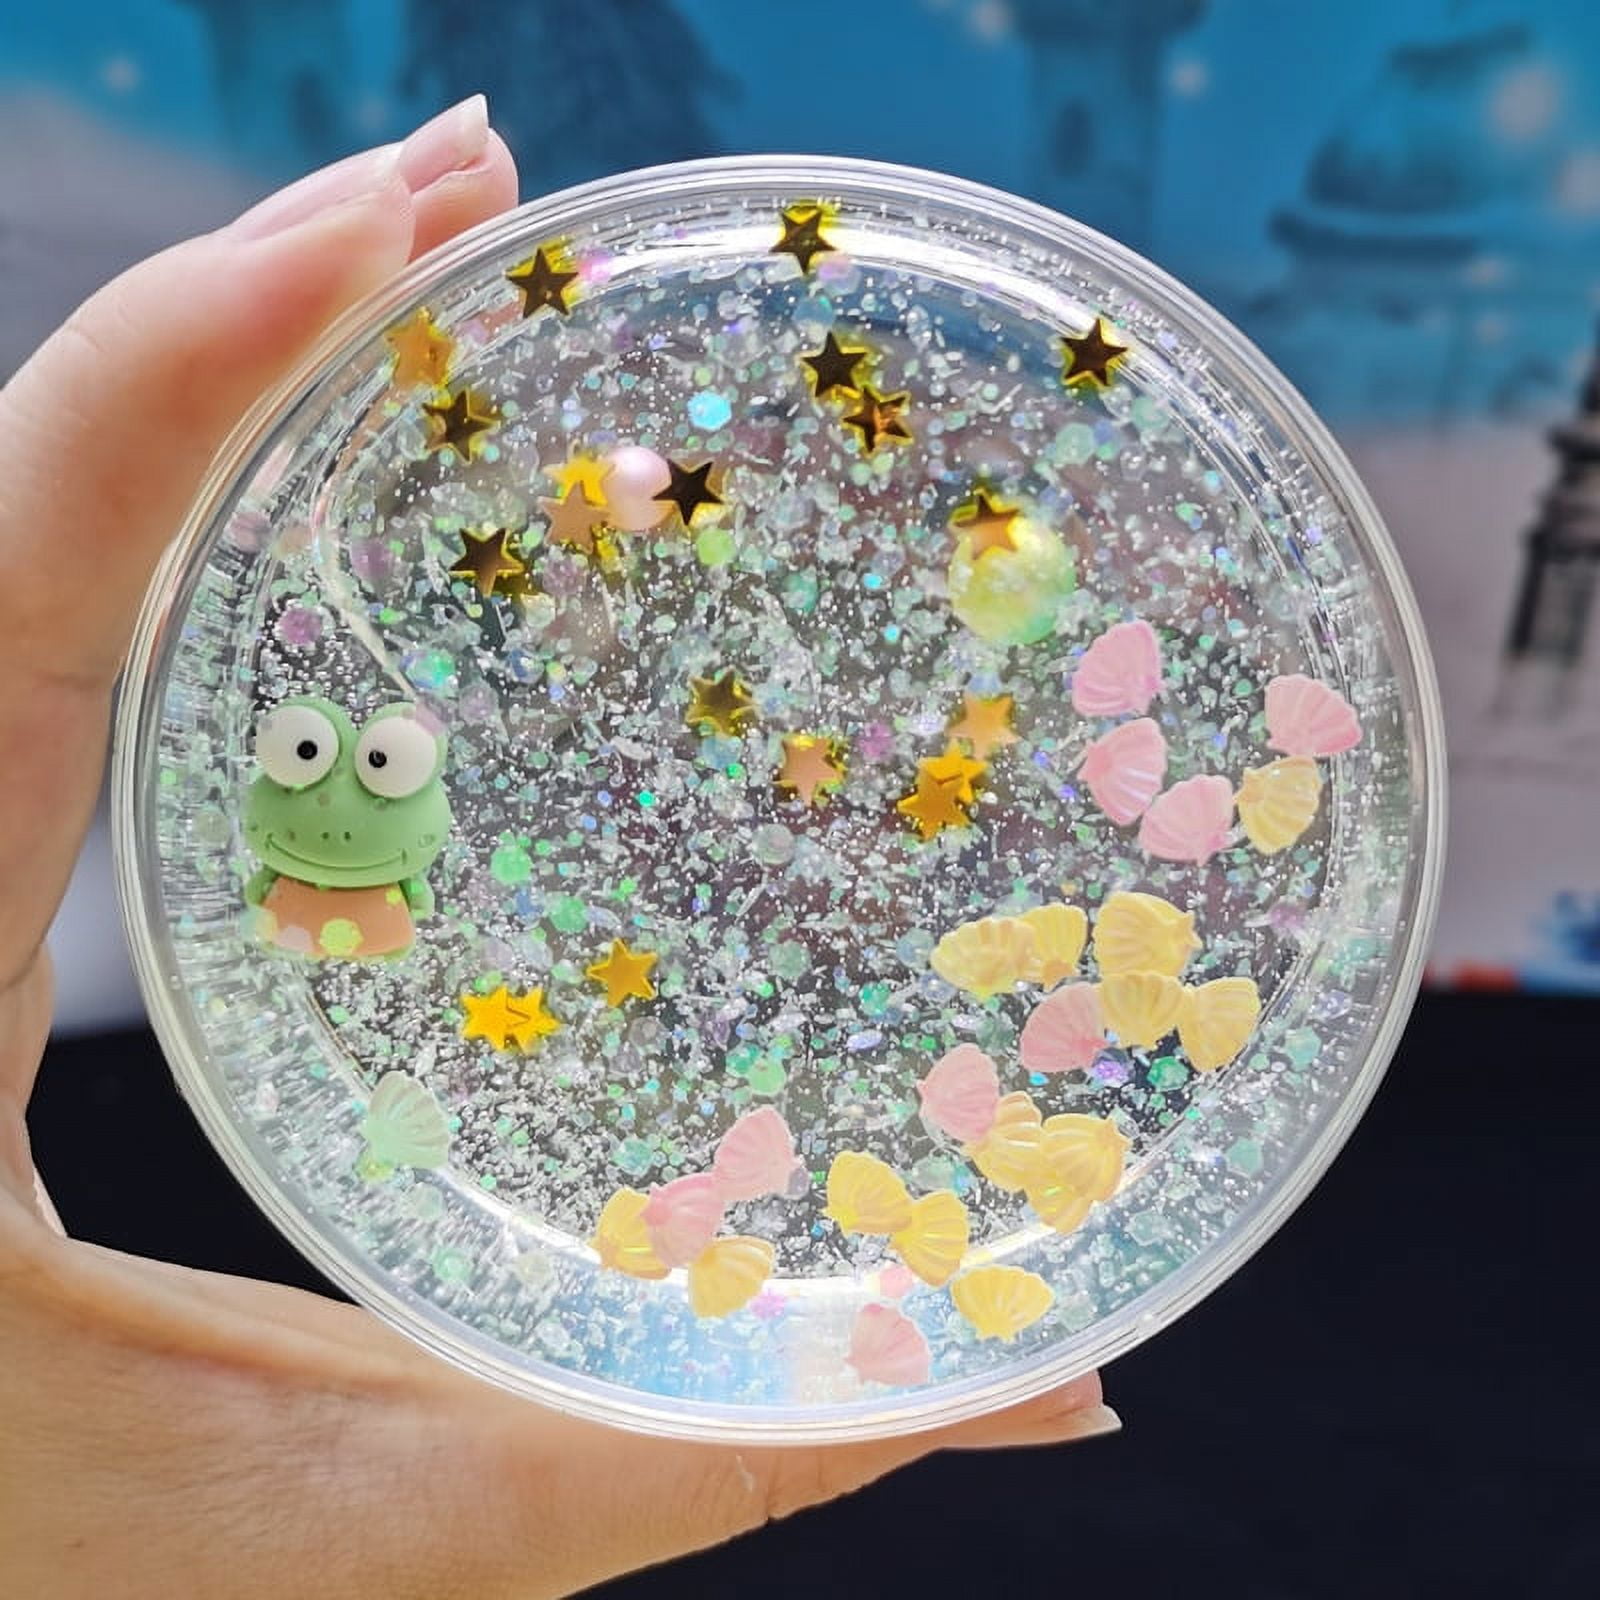 Kawaii Glitter Frog Resin Slime Charms for Slime Accessories Beads